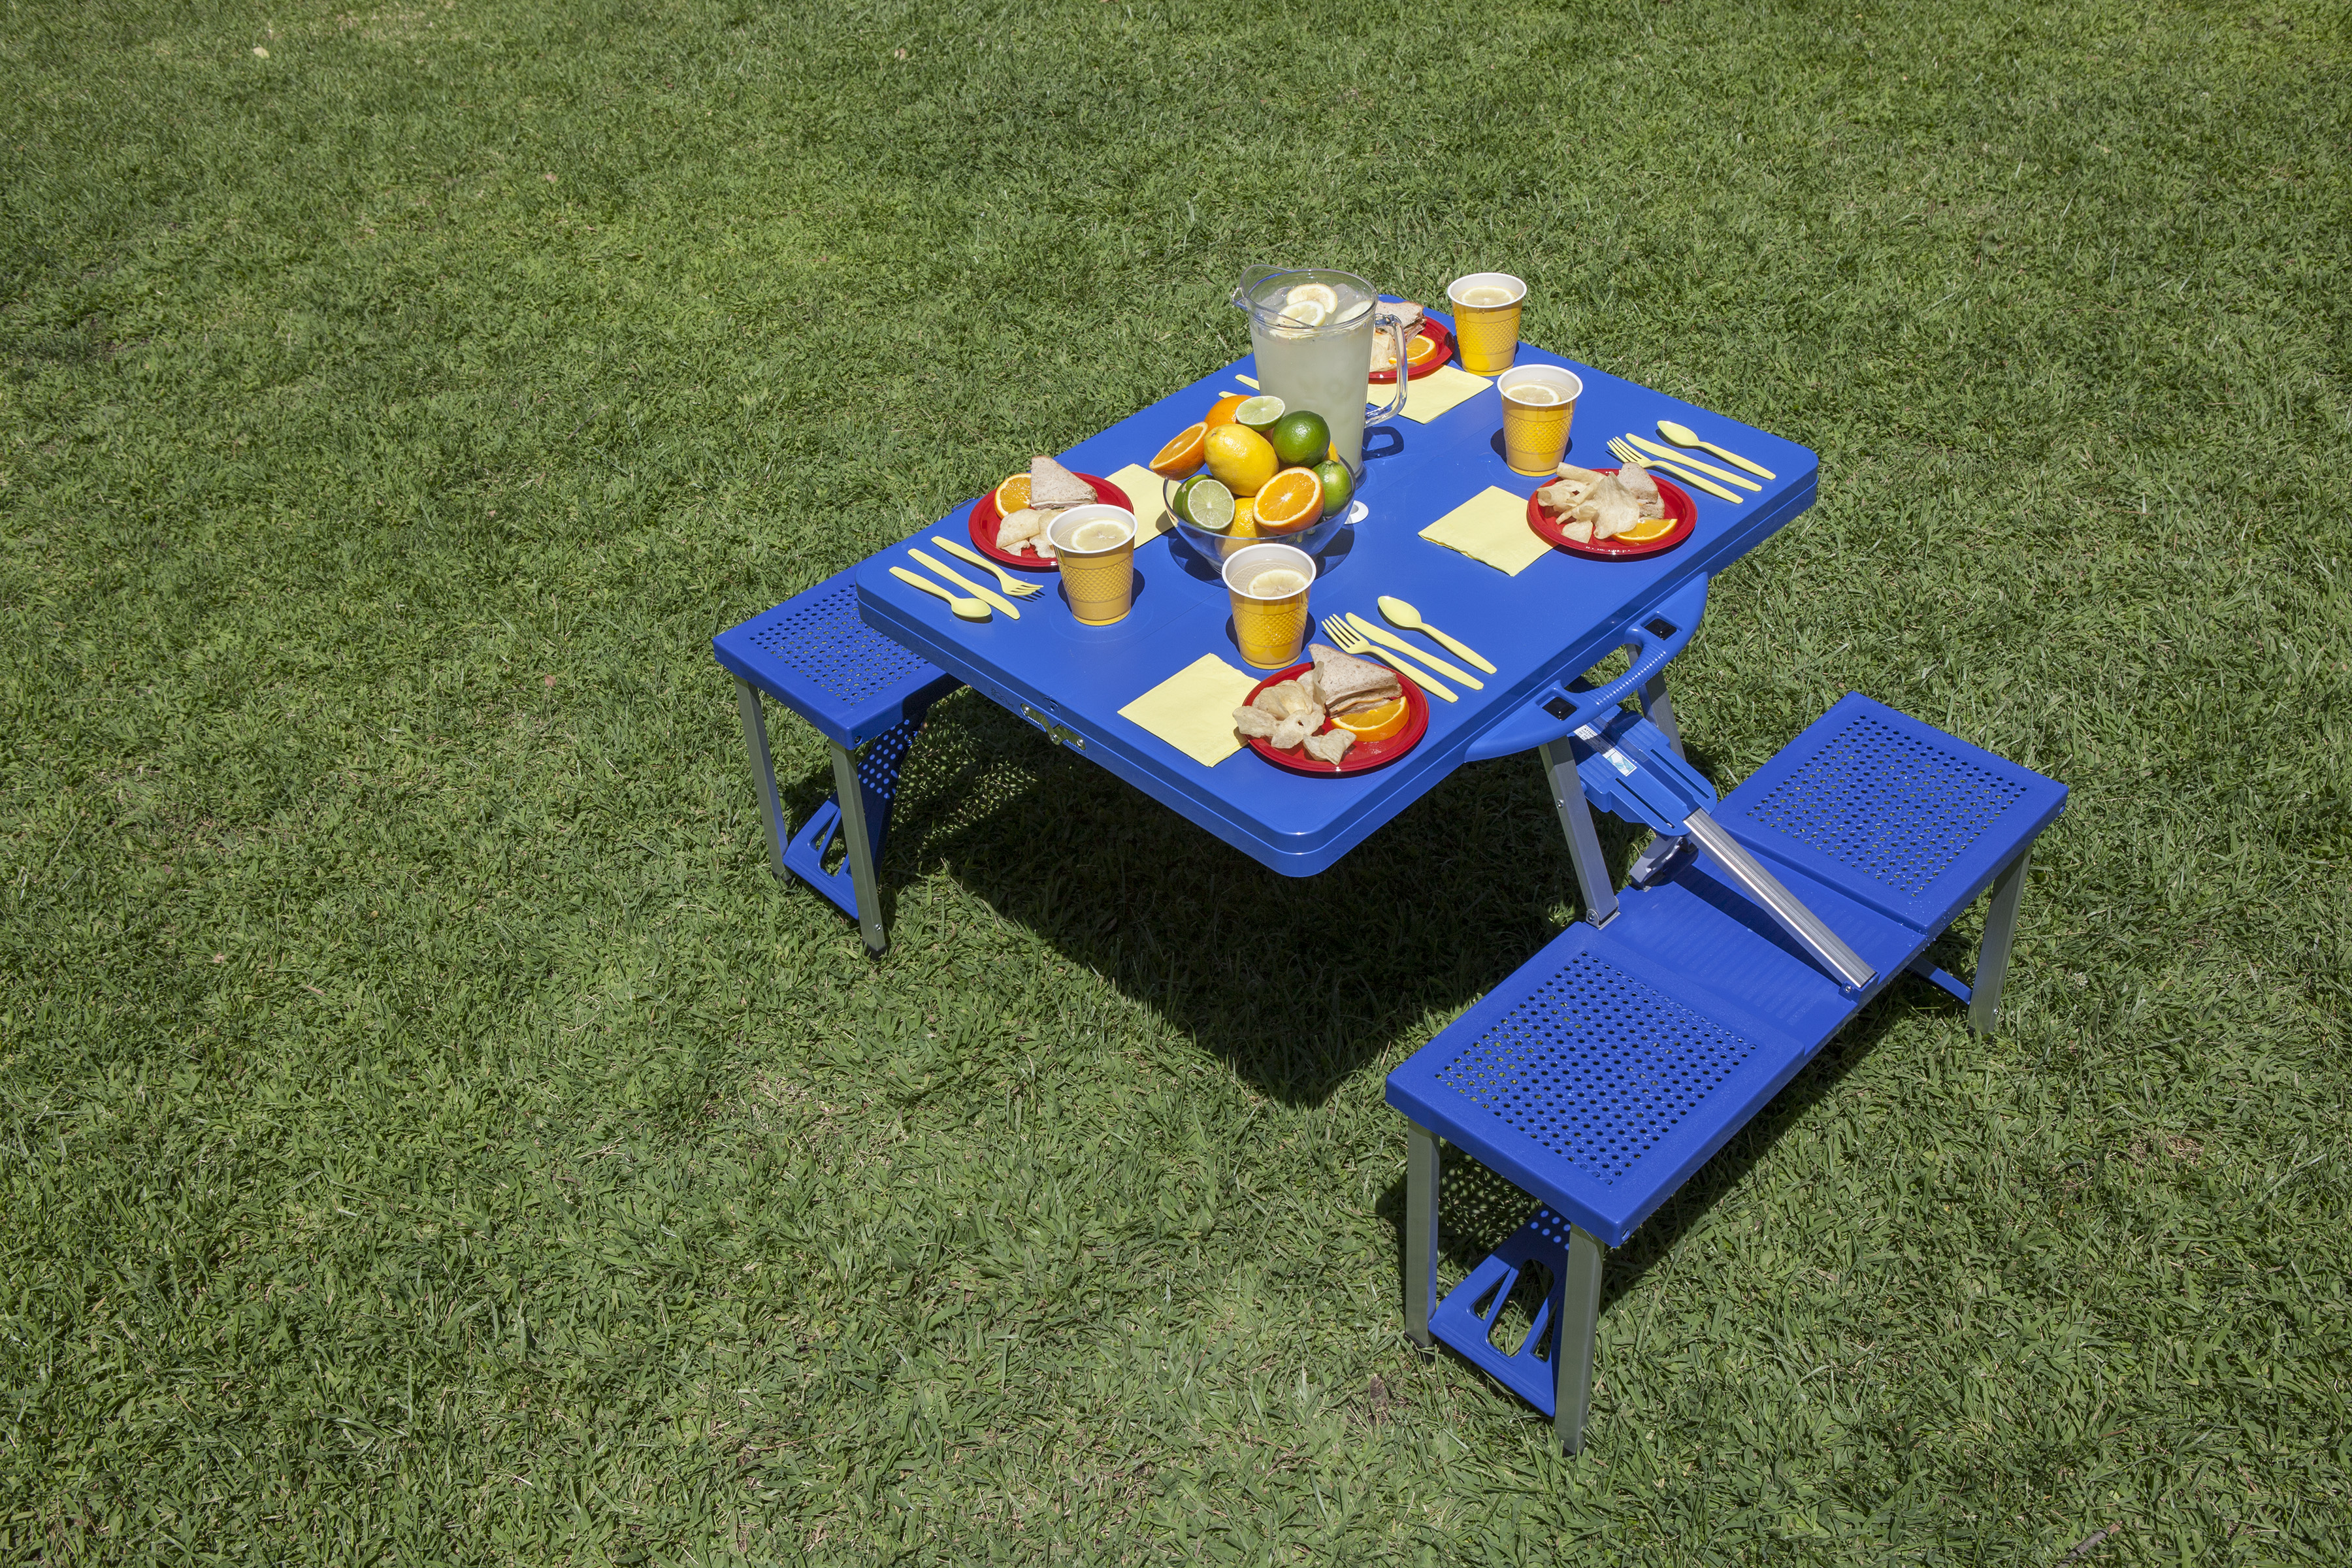 Illinois Fighting Illini - Picnic Table Portable Folding Table with Seats